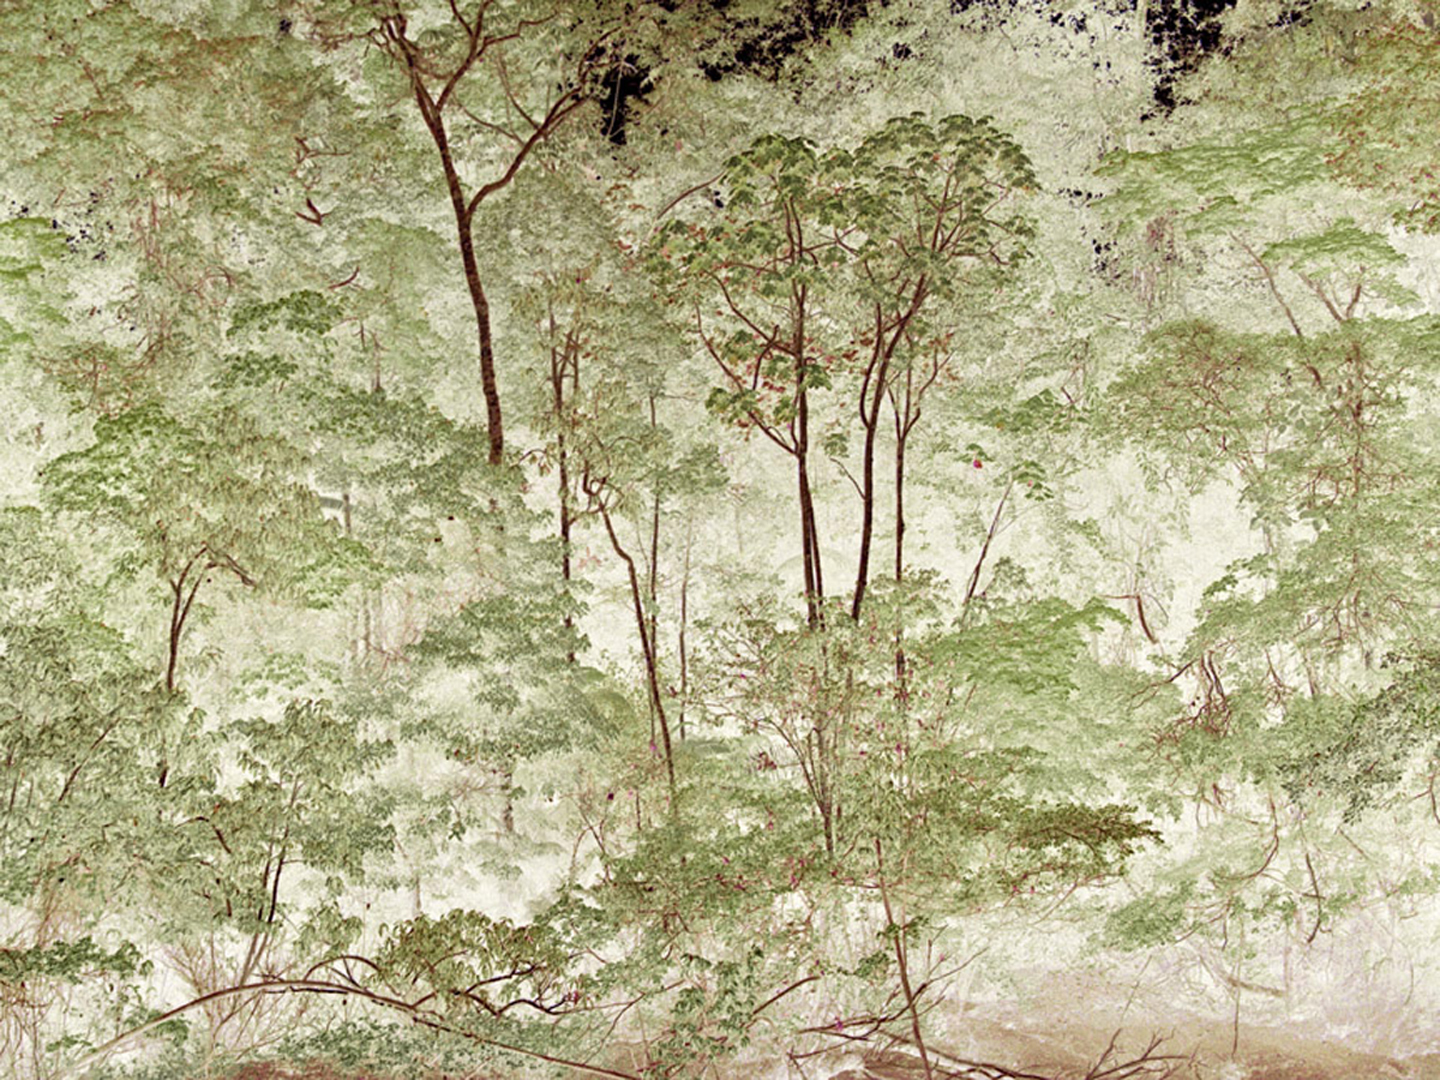   High Trees,  Tiputini River,&nbsp;Ecuador, 2009   Archival ink jet print on Masa paper    30” x 40”    